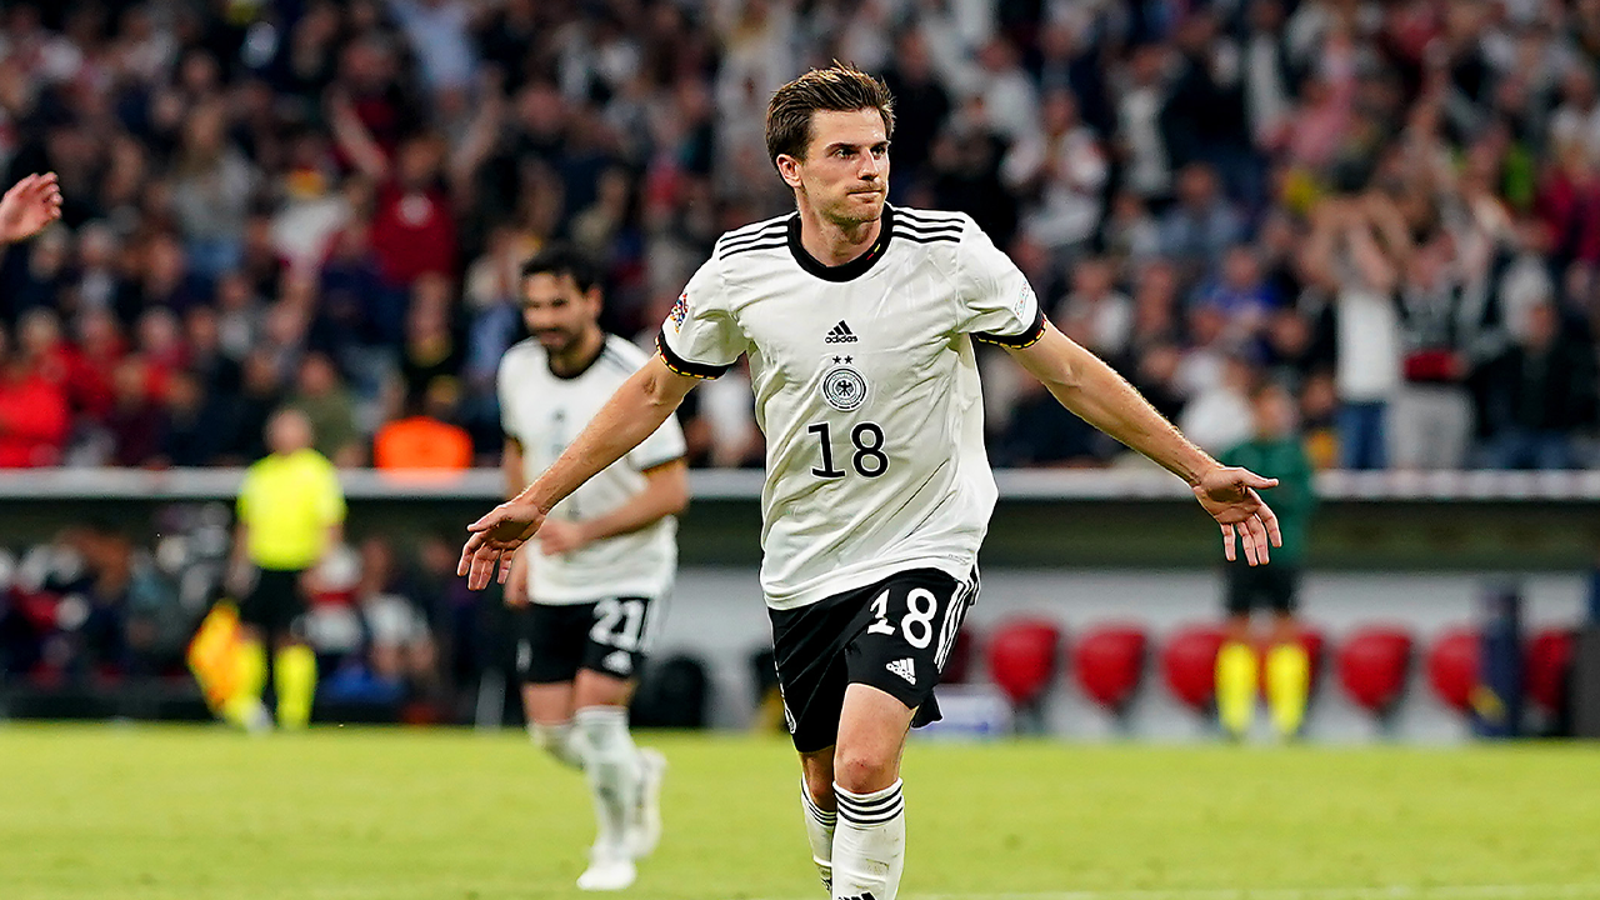 Jonas Hofmann's strike from close range puts Germany ahead of England, 1-0